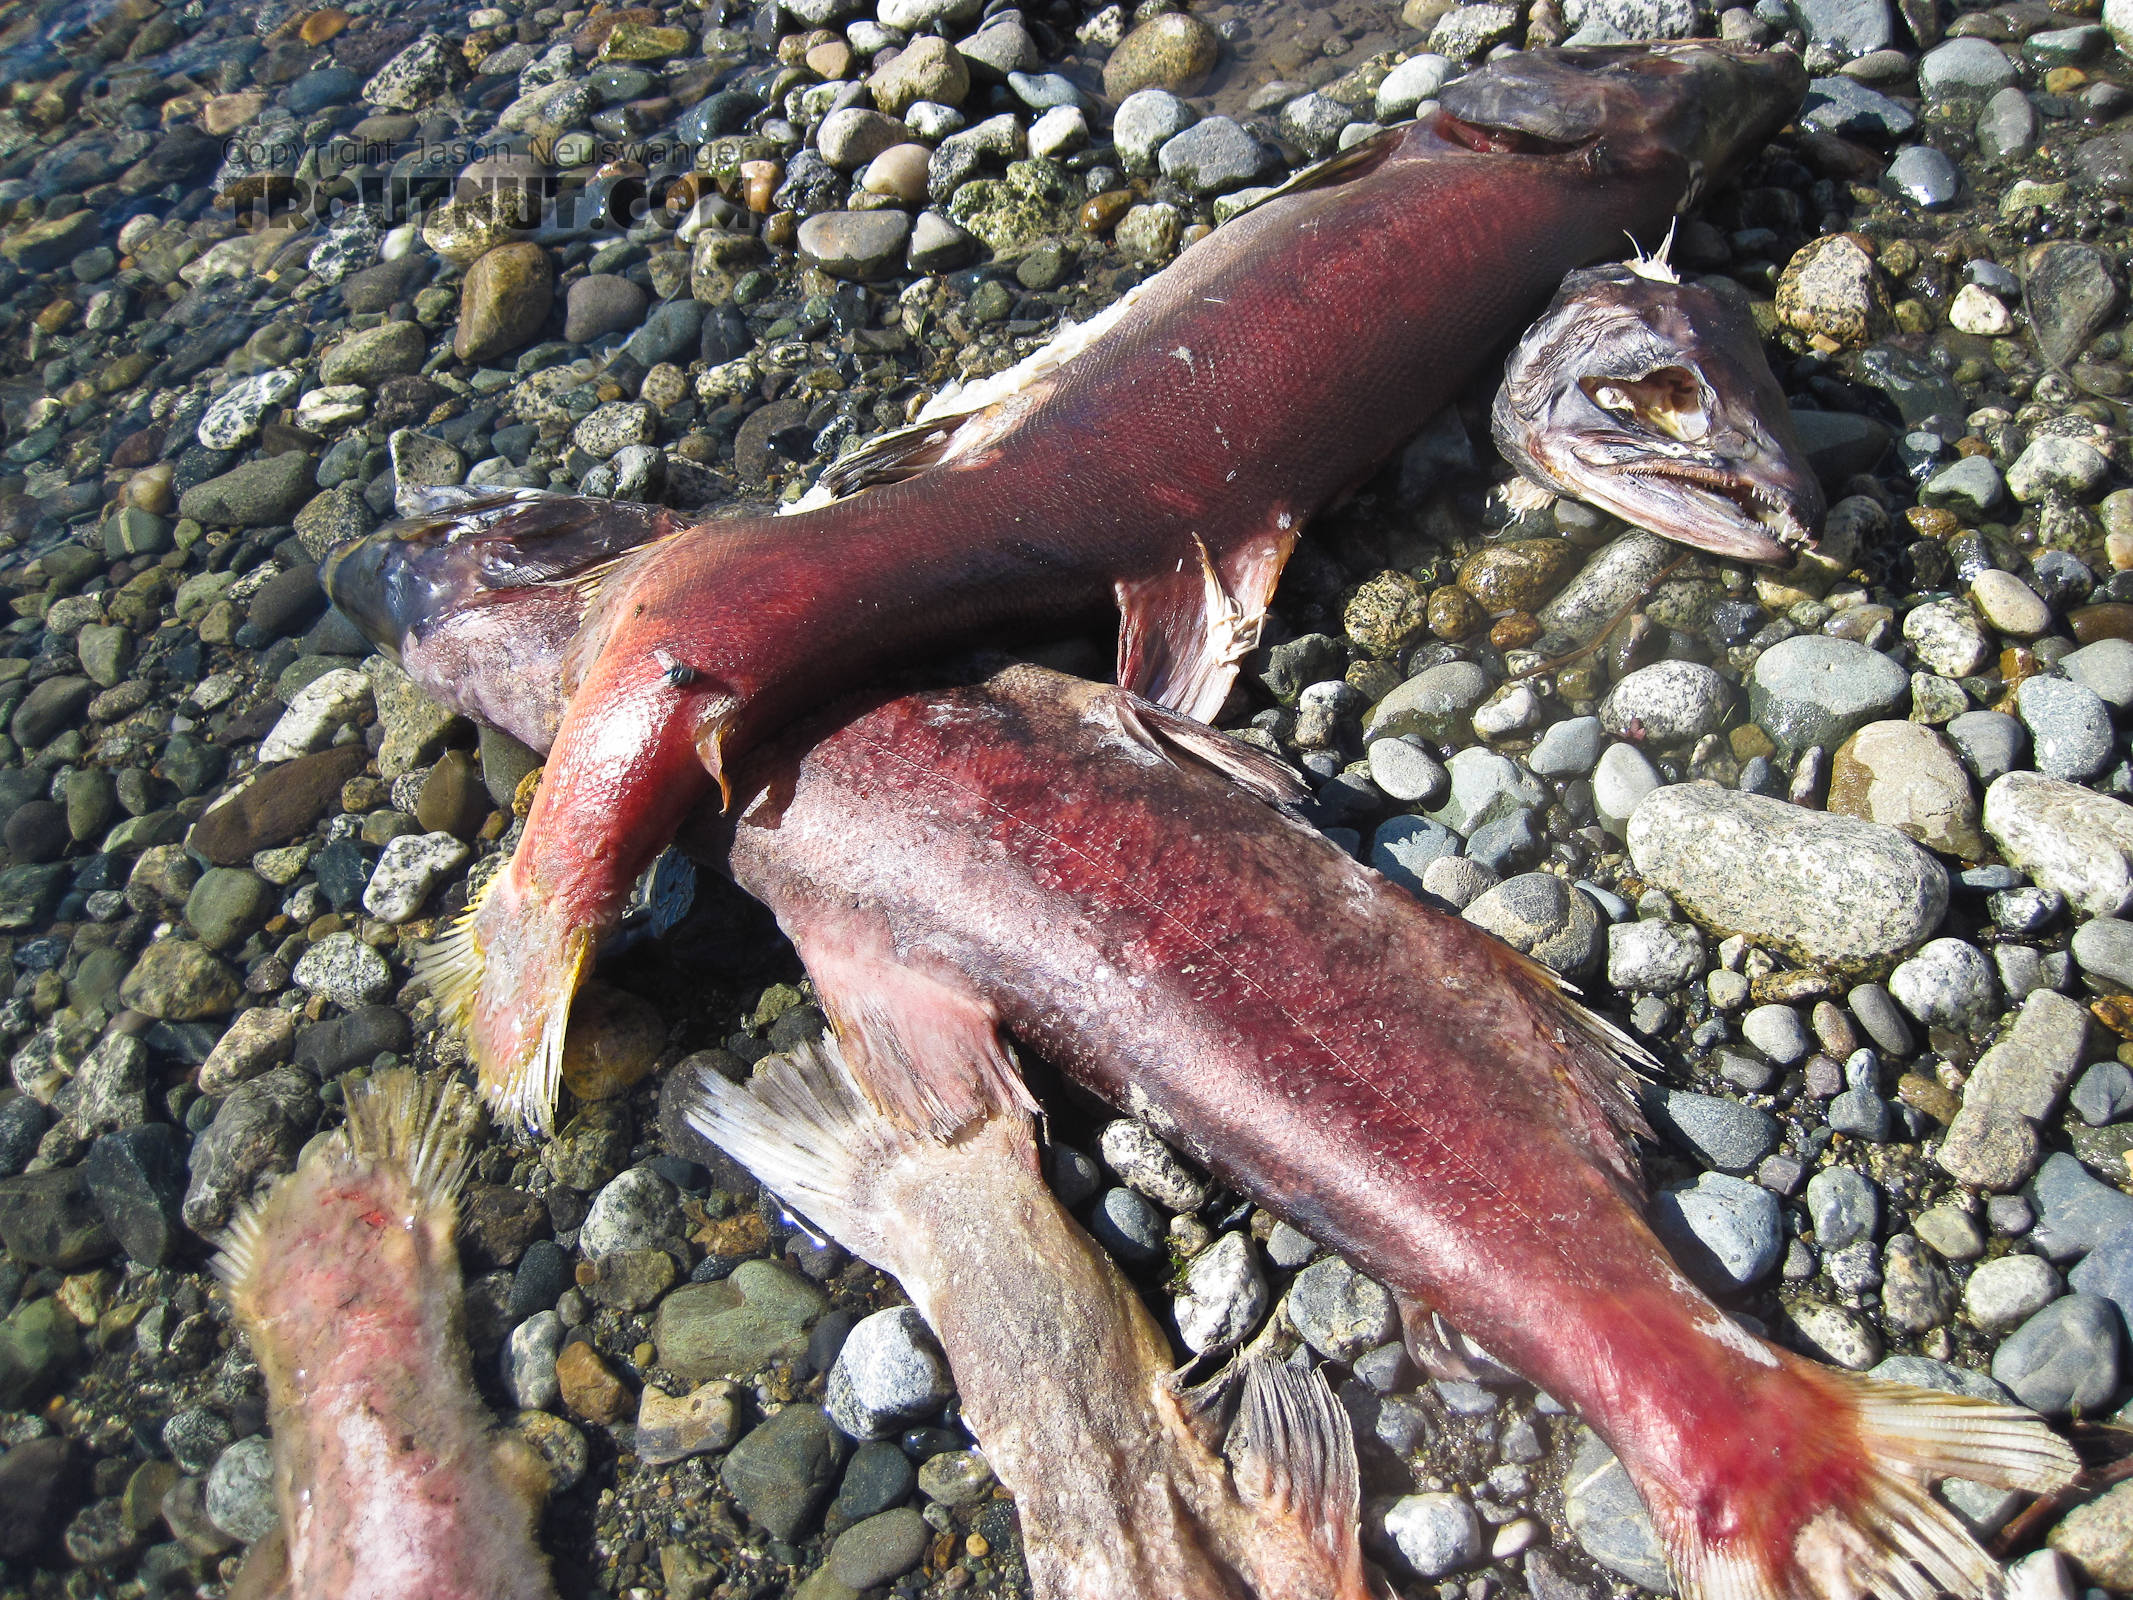 Dead sockeye salmon fertilizing the upper Gulkana River. From the Gulkana River in Alaska.